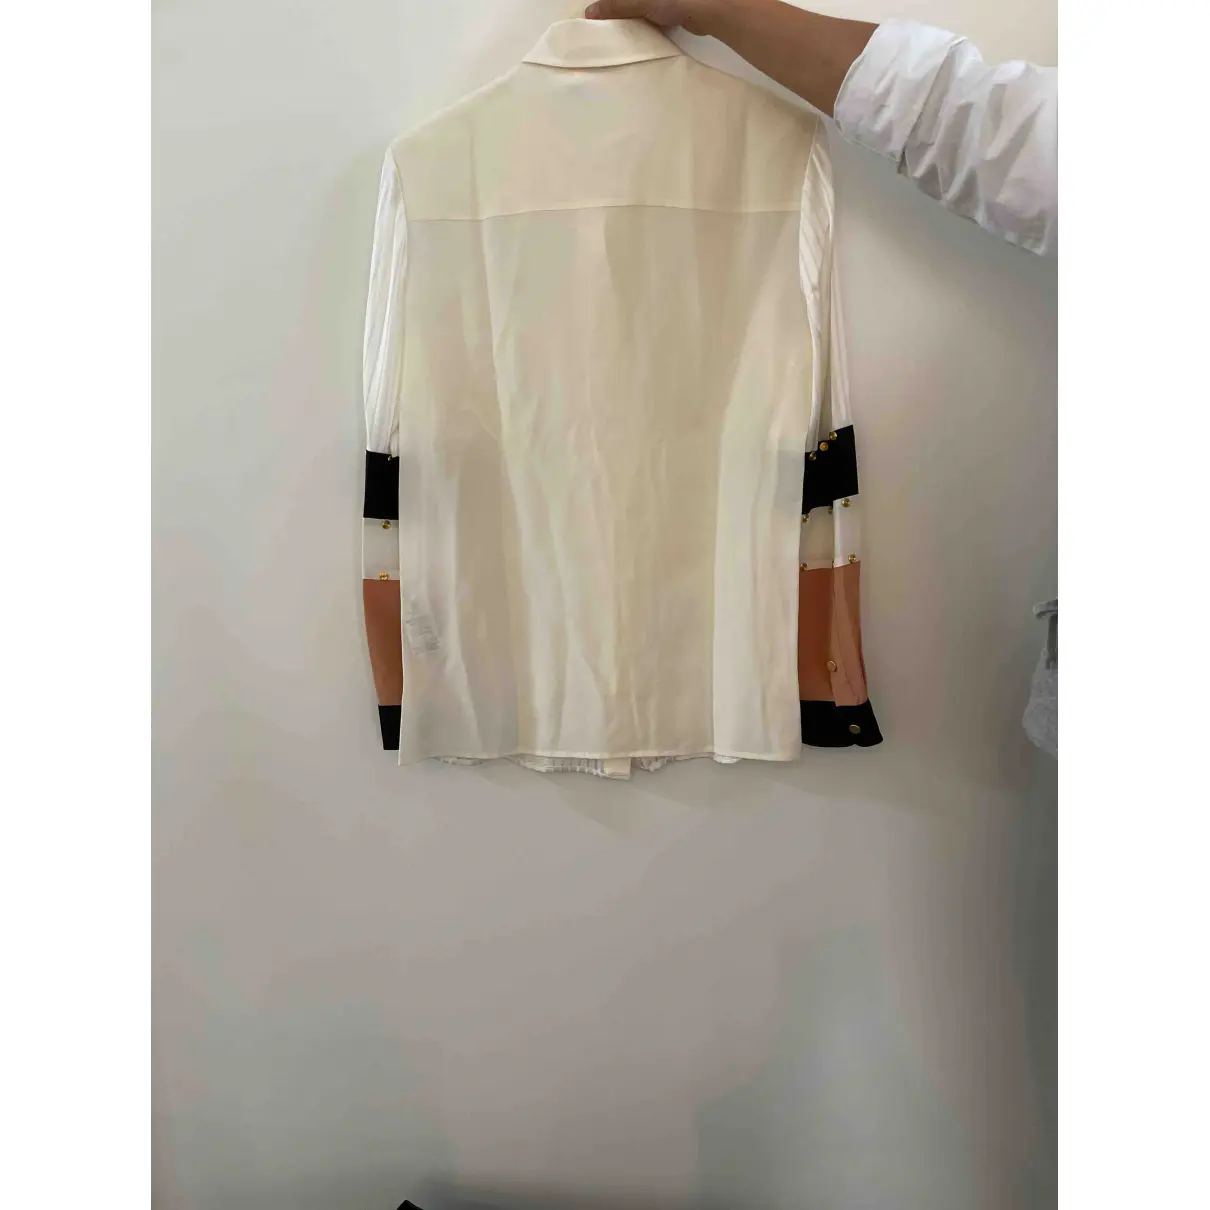 Buy Tory Burch Silk blouse online